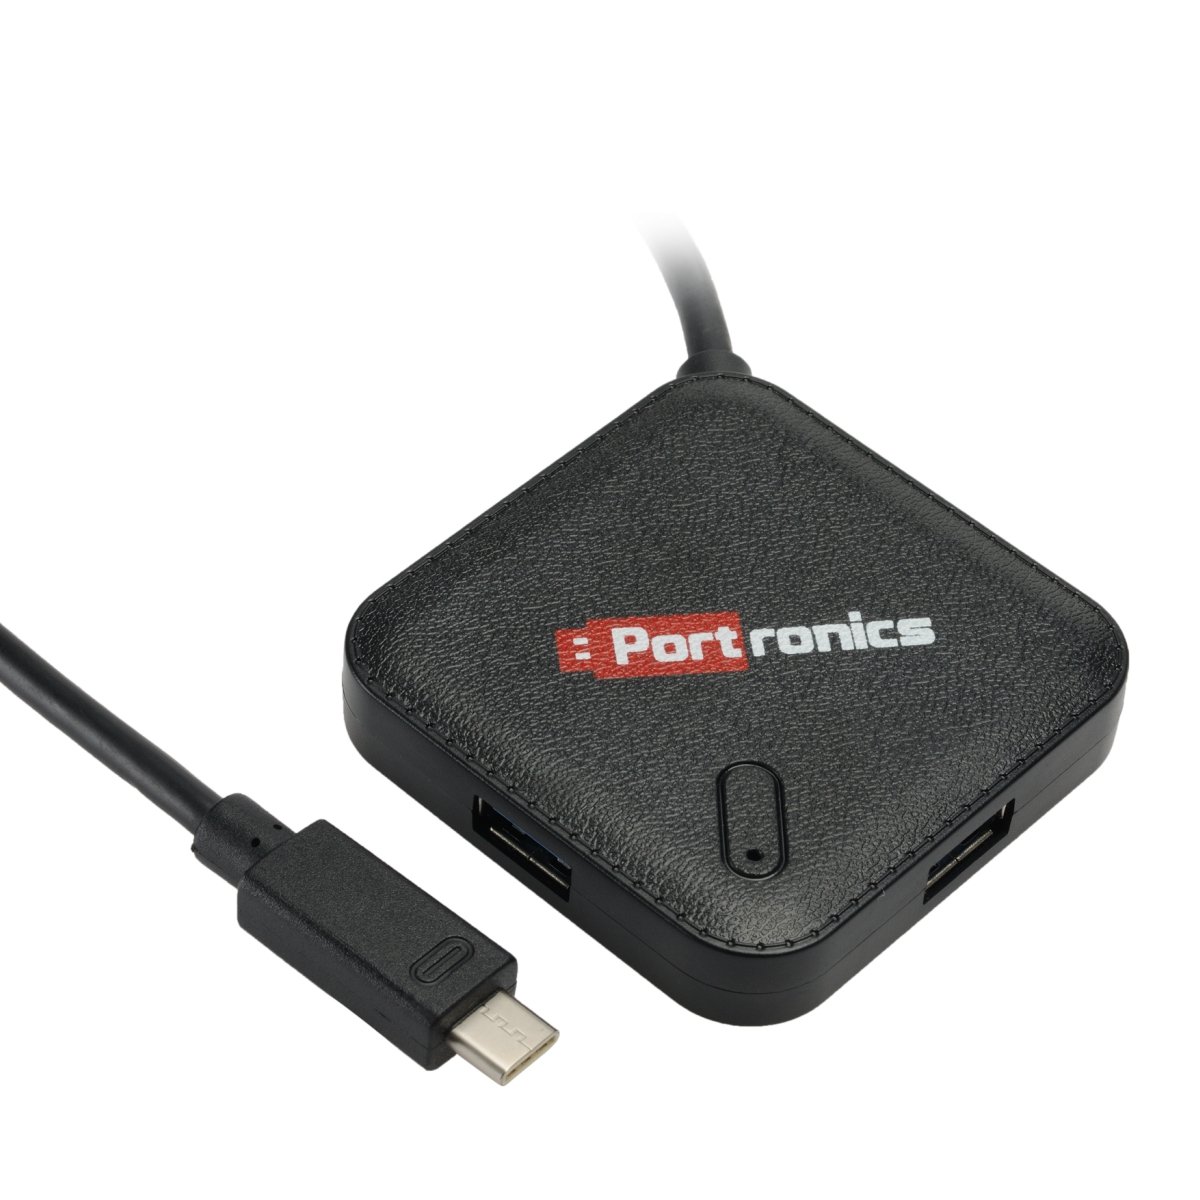 Portronics_USB_3.0_Hub_Type_C_Cable.jpg